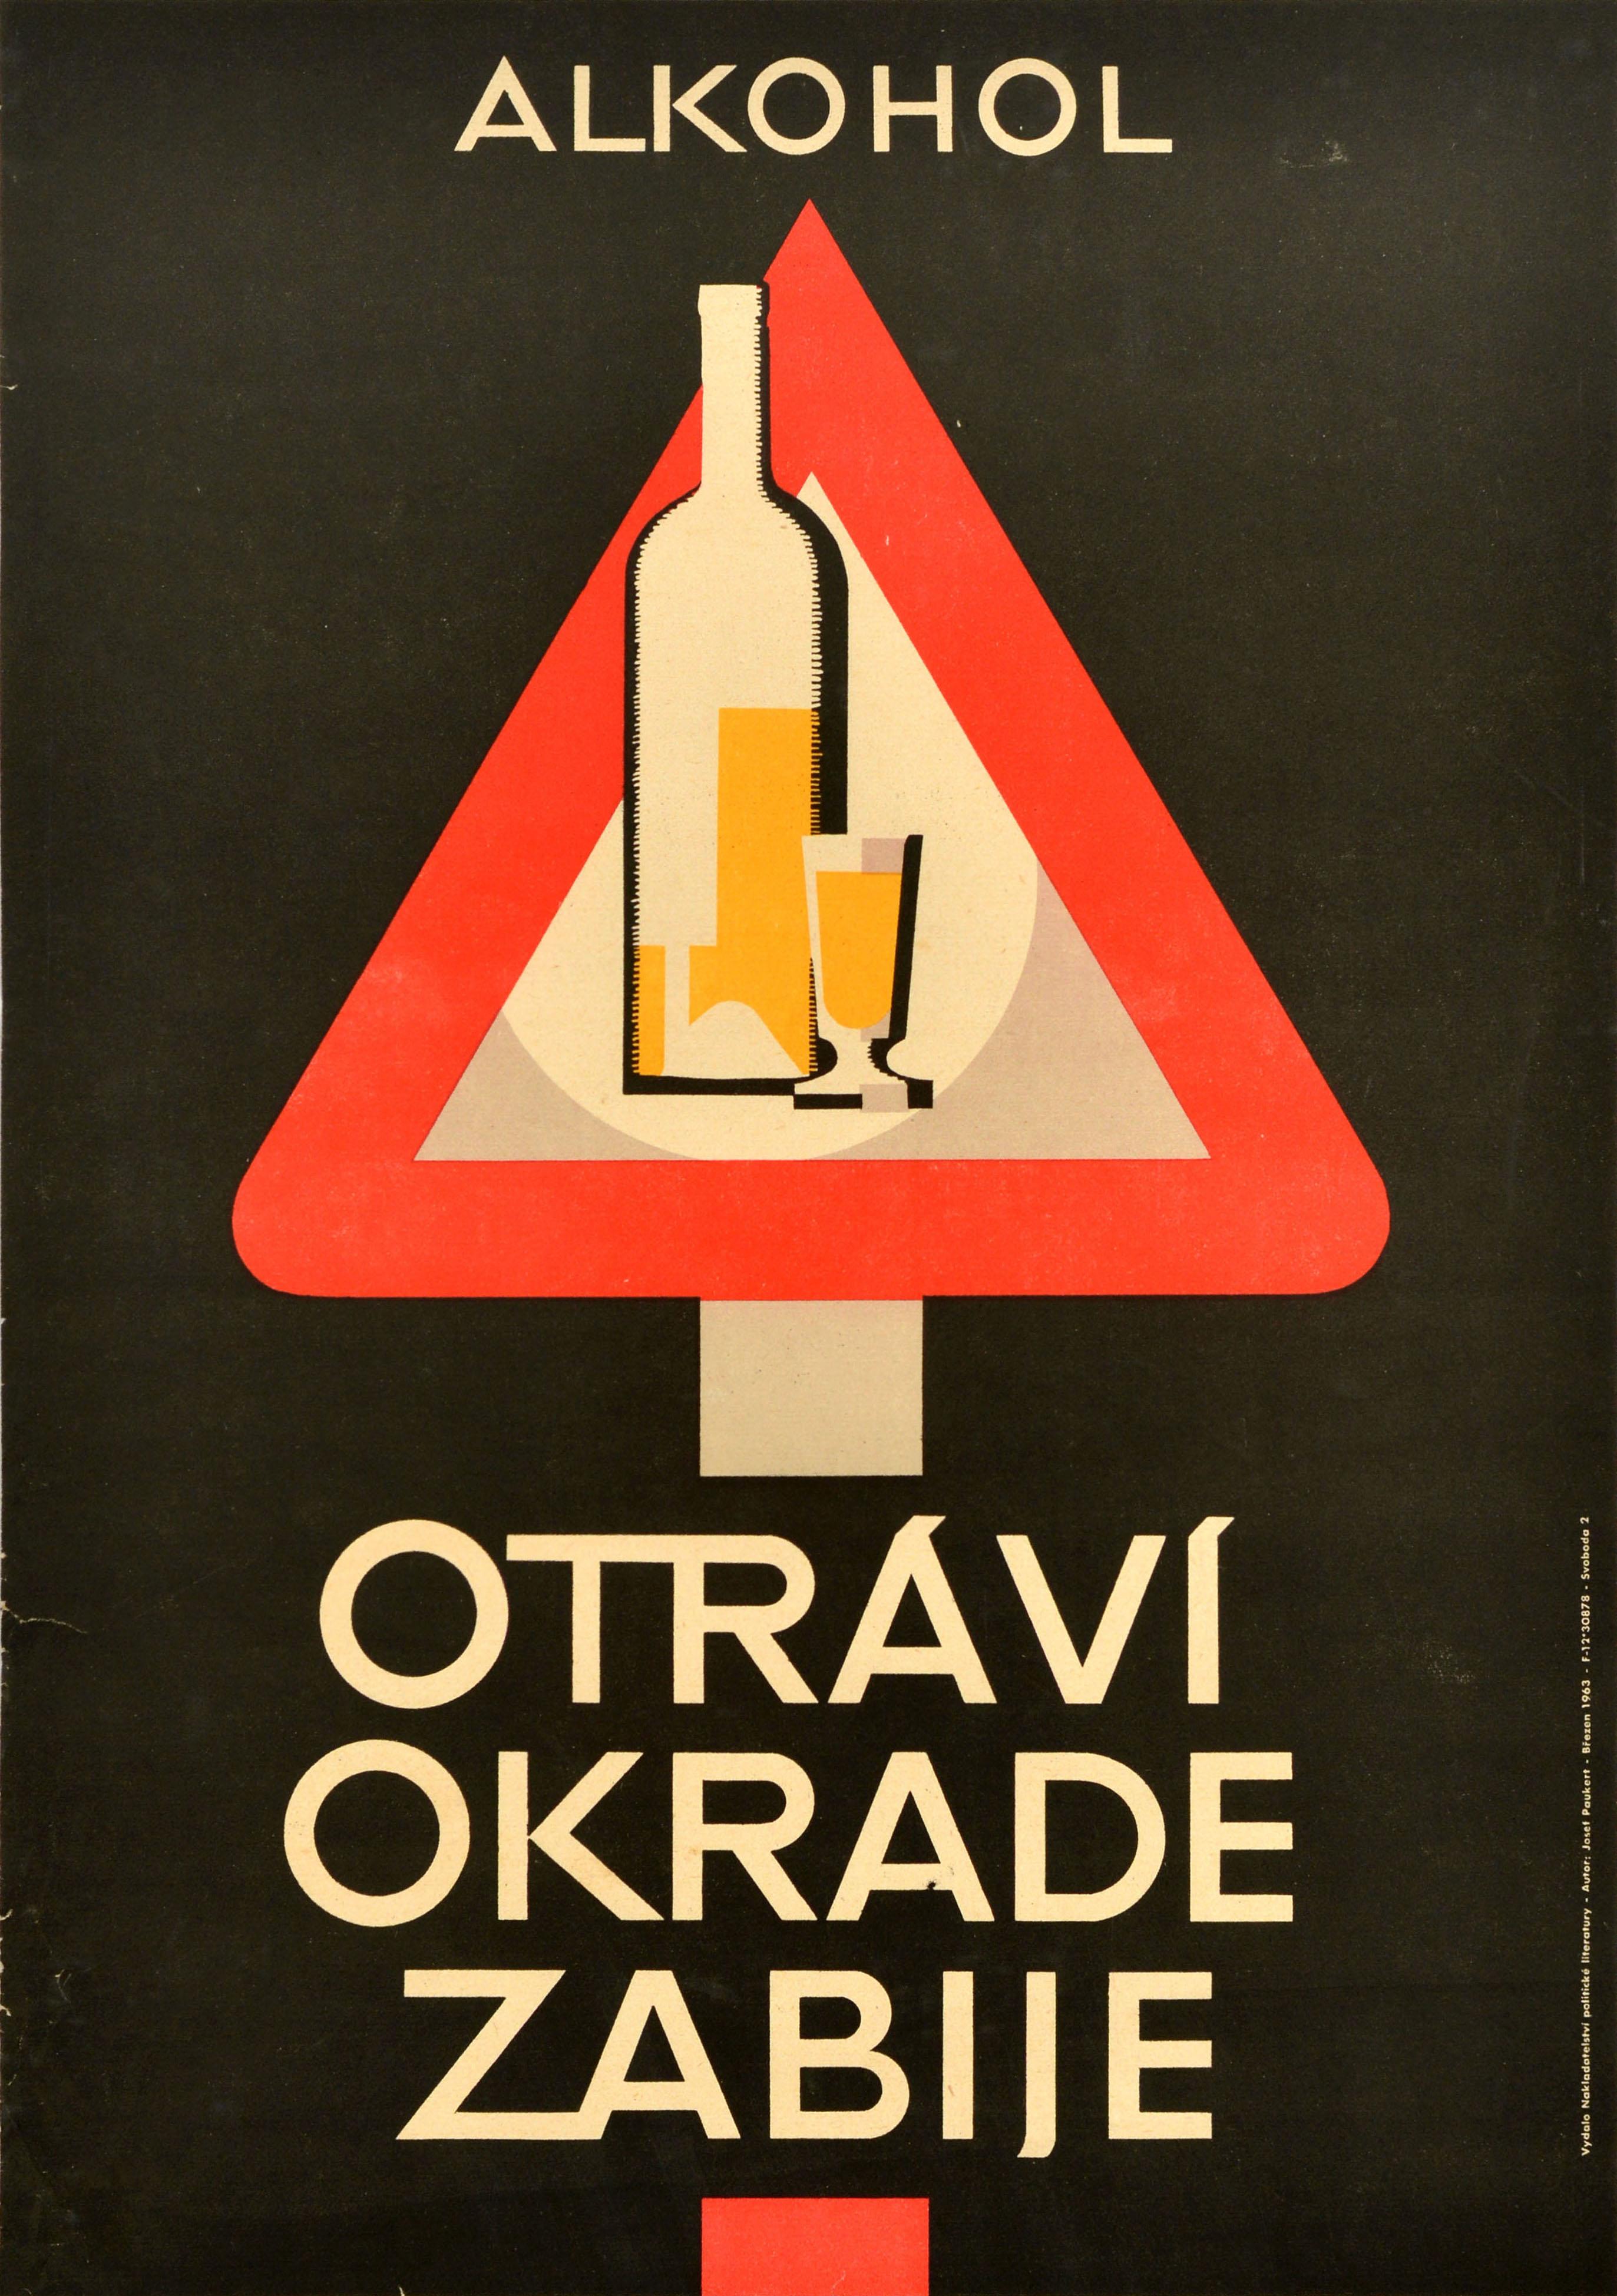 Unknown Print - Original Vintage Anti Alcoholism Propaganda Poster Alcohol Poisons Robs Kills